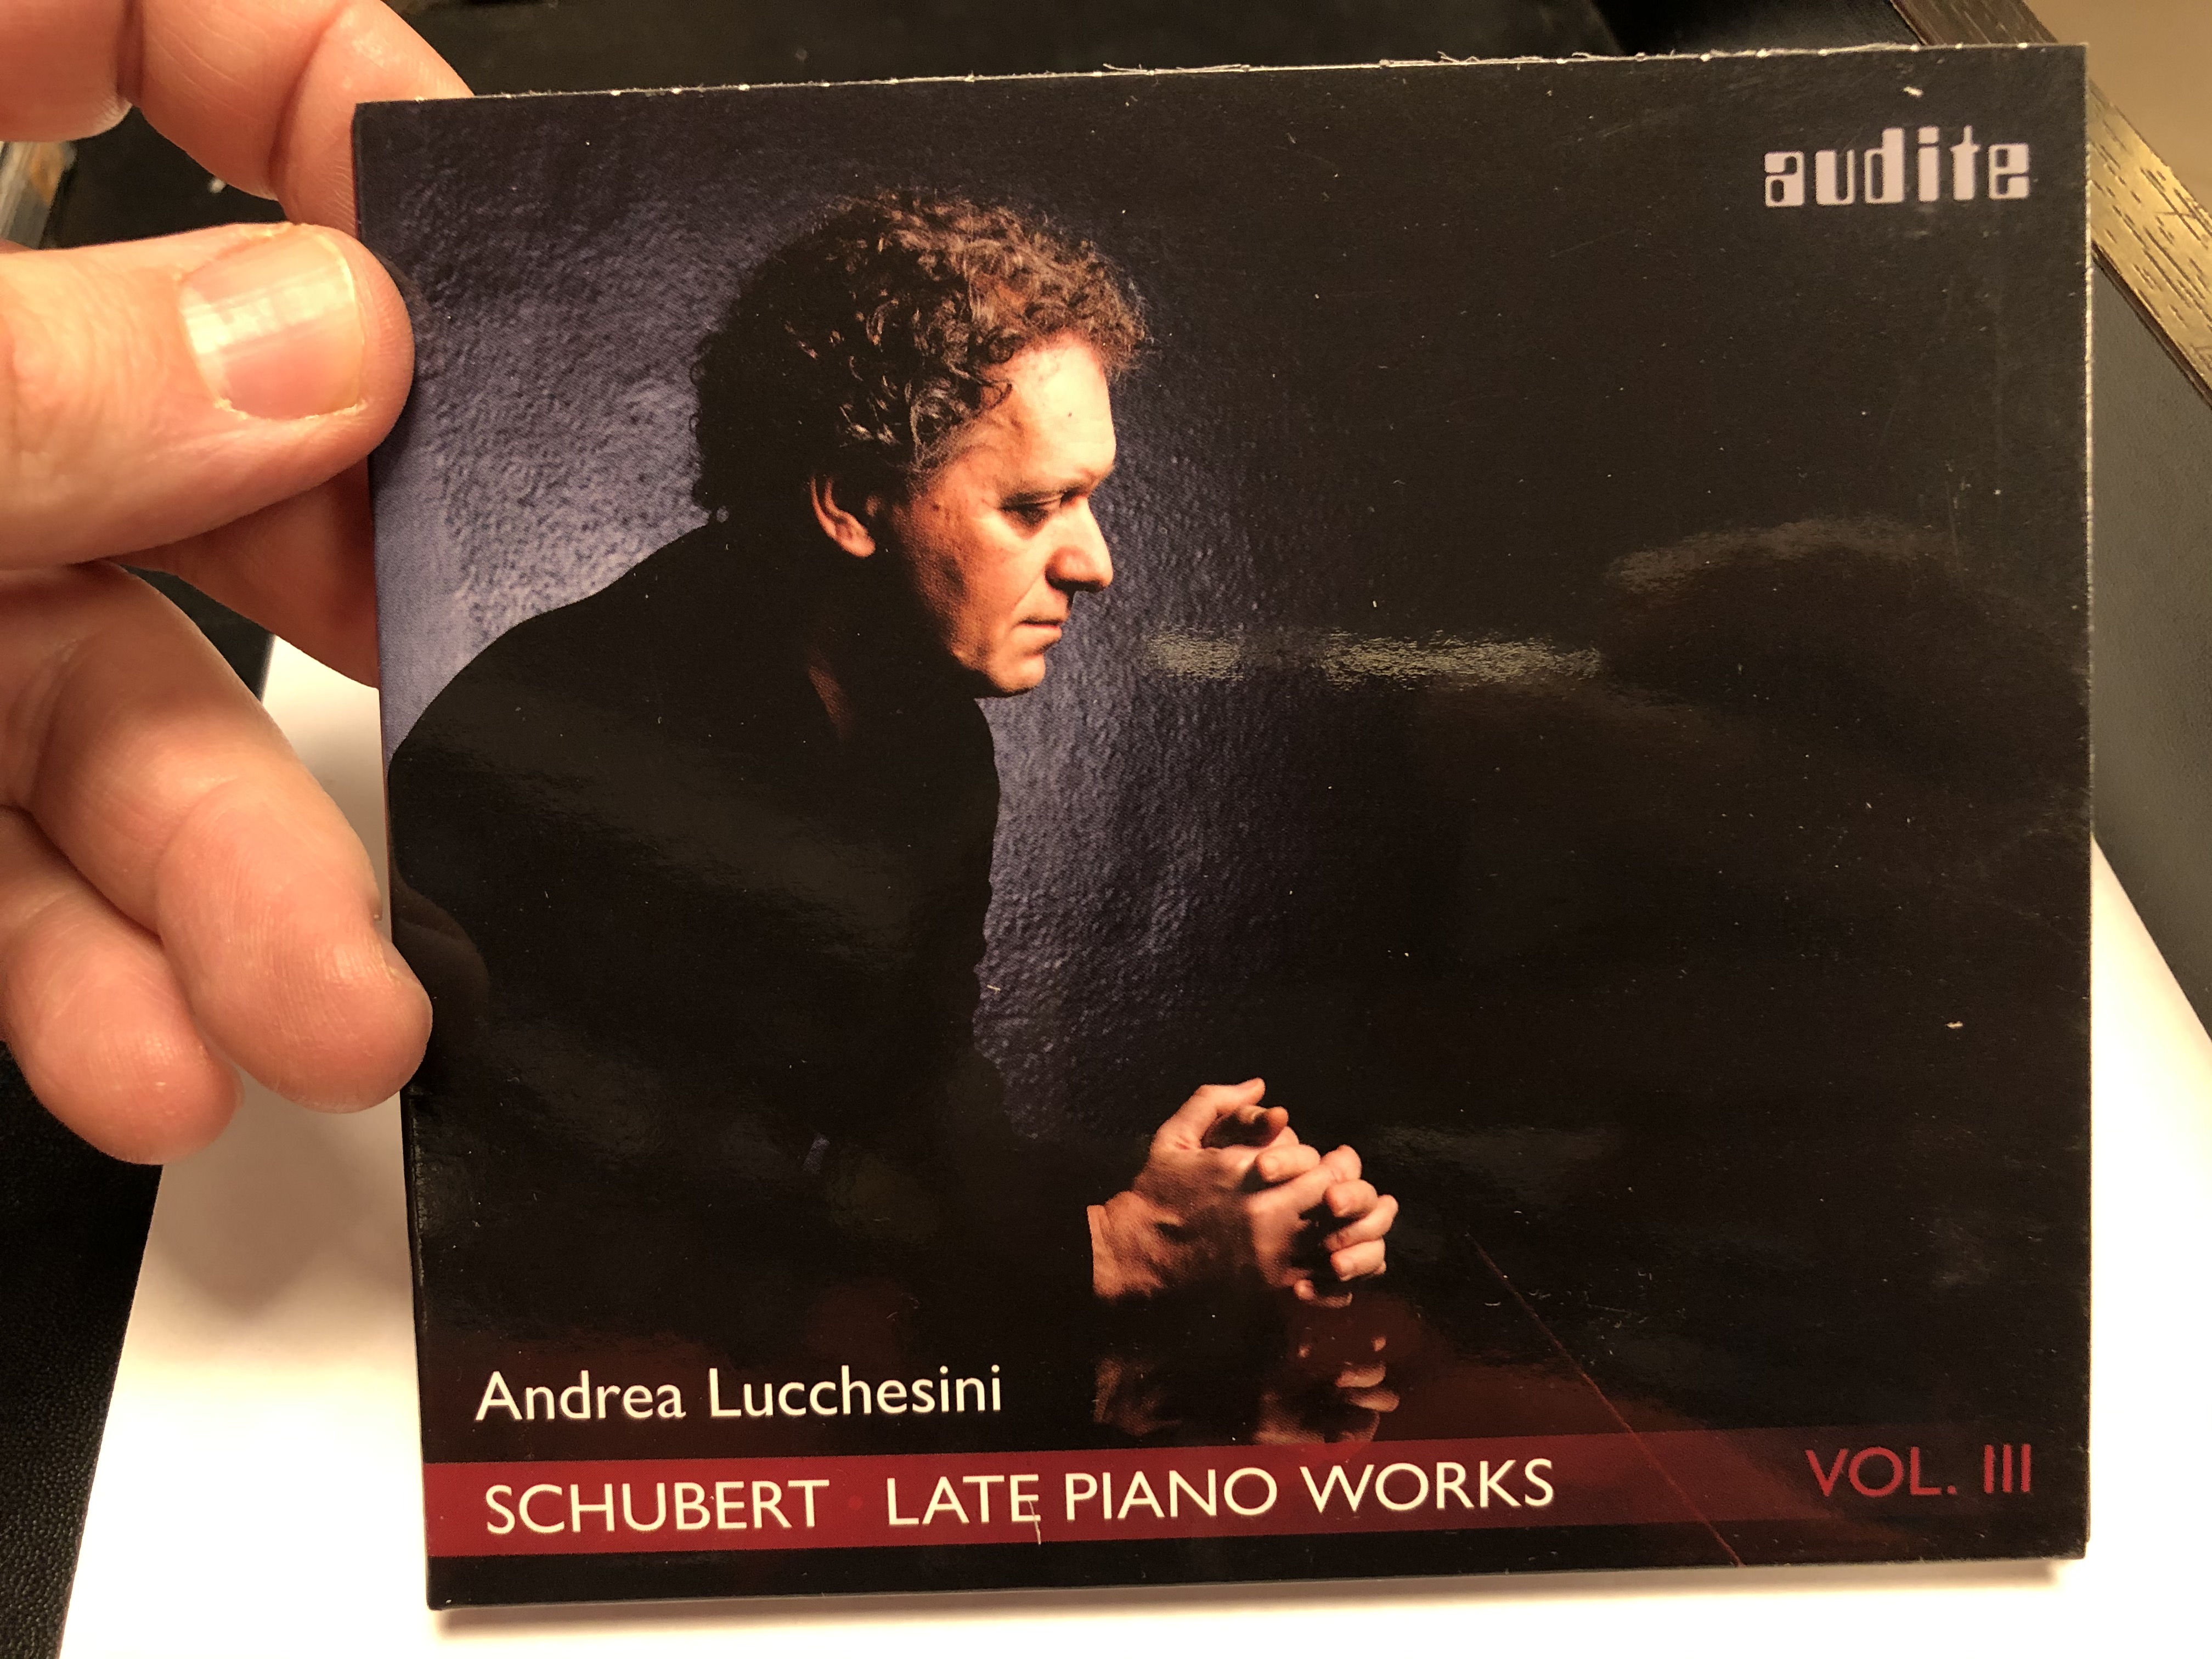 andrea-lucchesini-schubert-late-piano-works-vol.-iii-audite-audio-cd-2020-97-1-.jpg